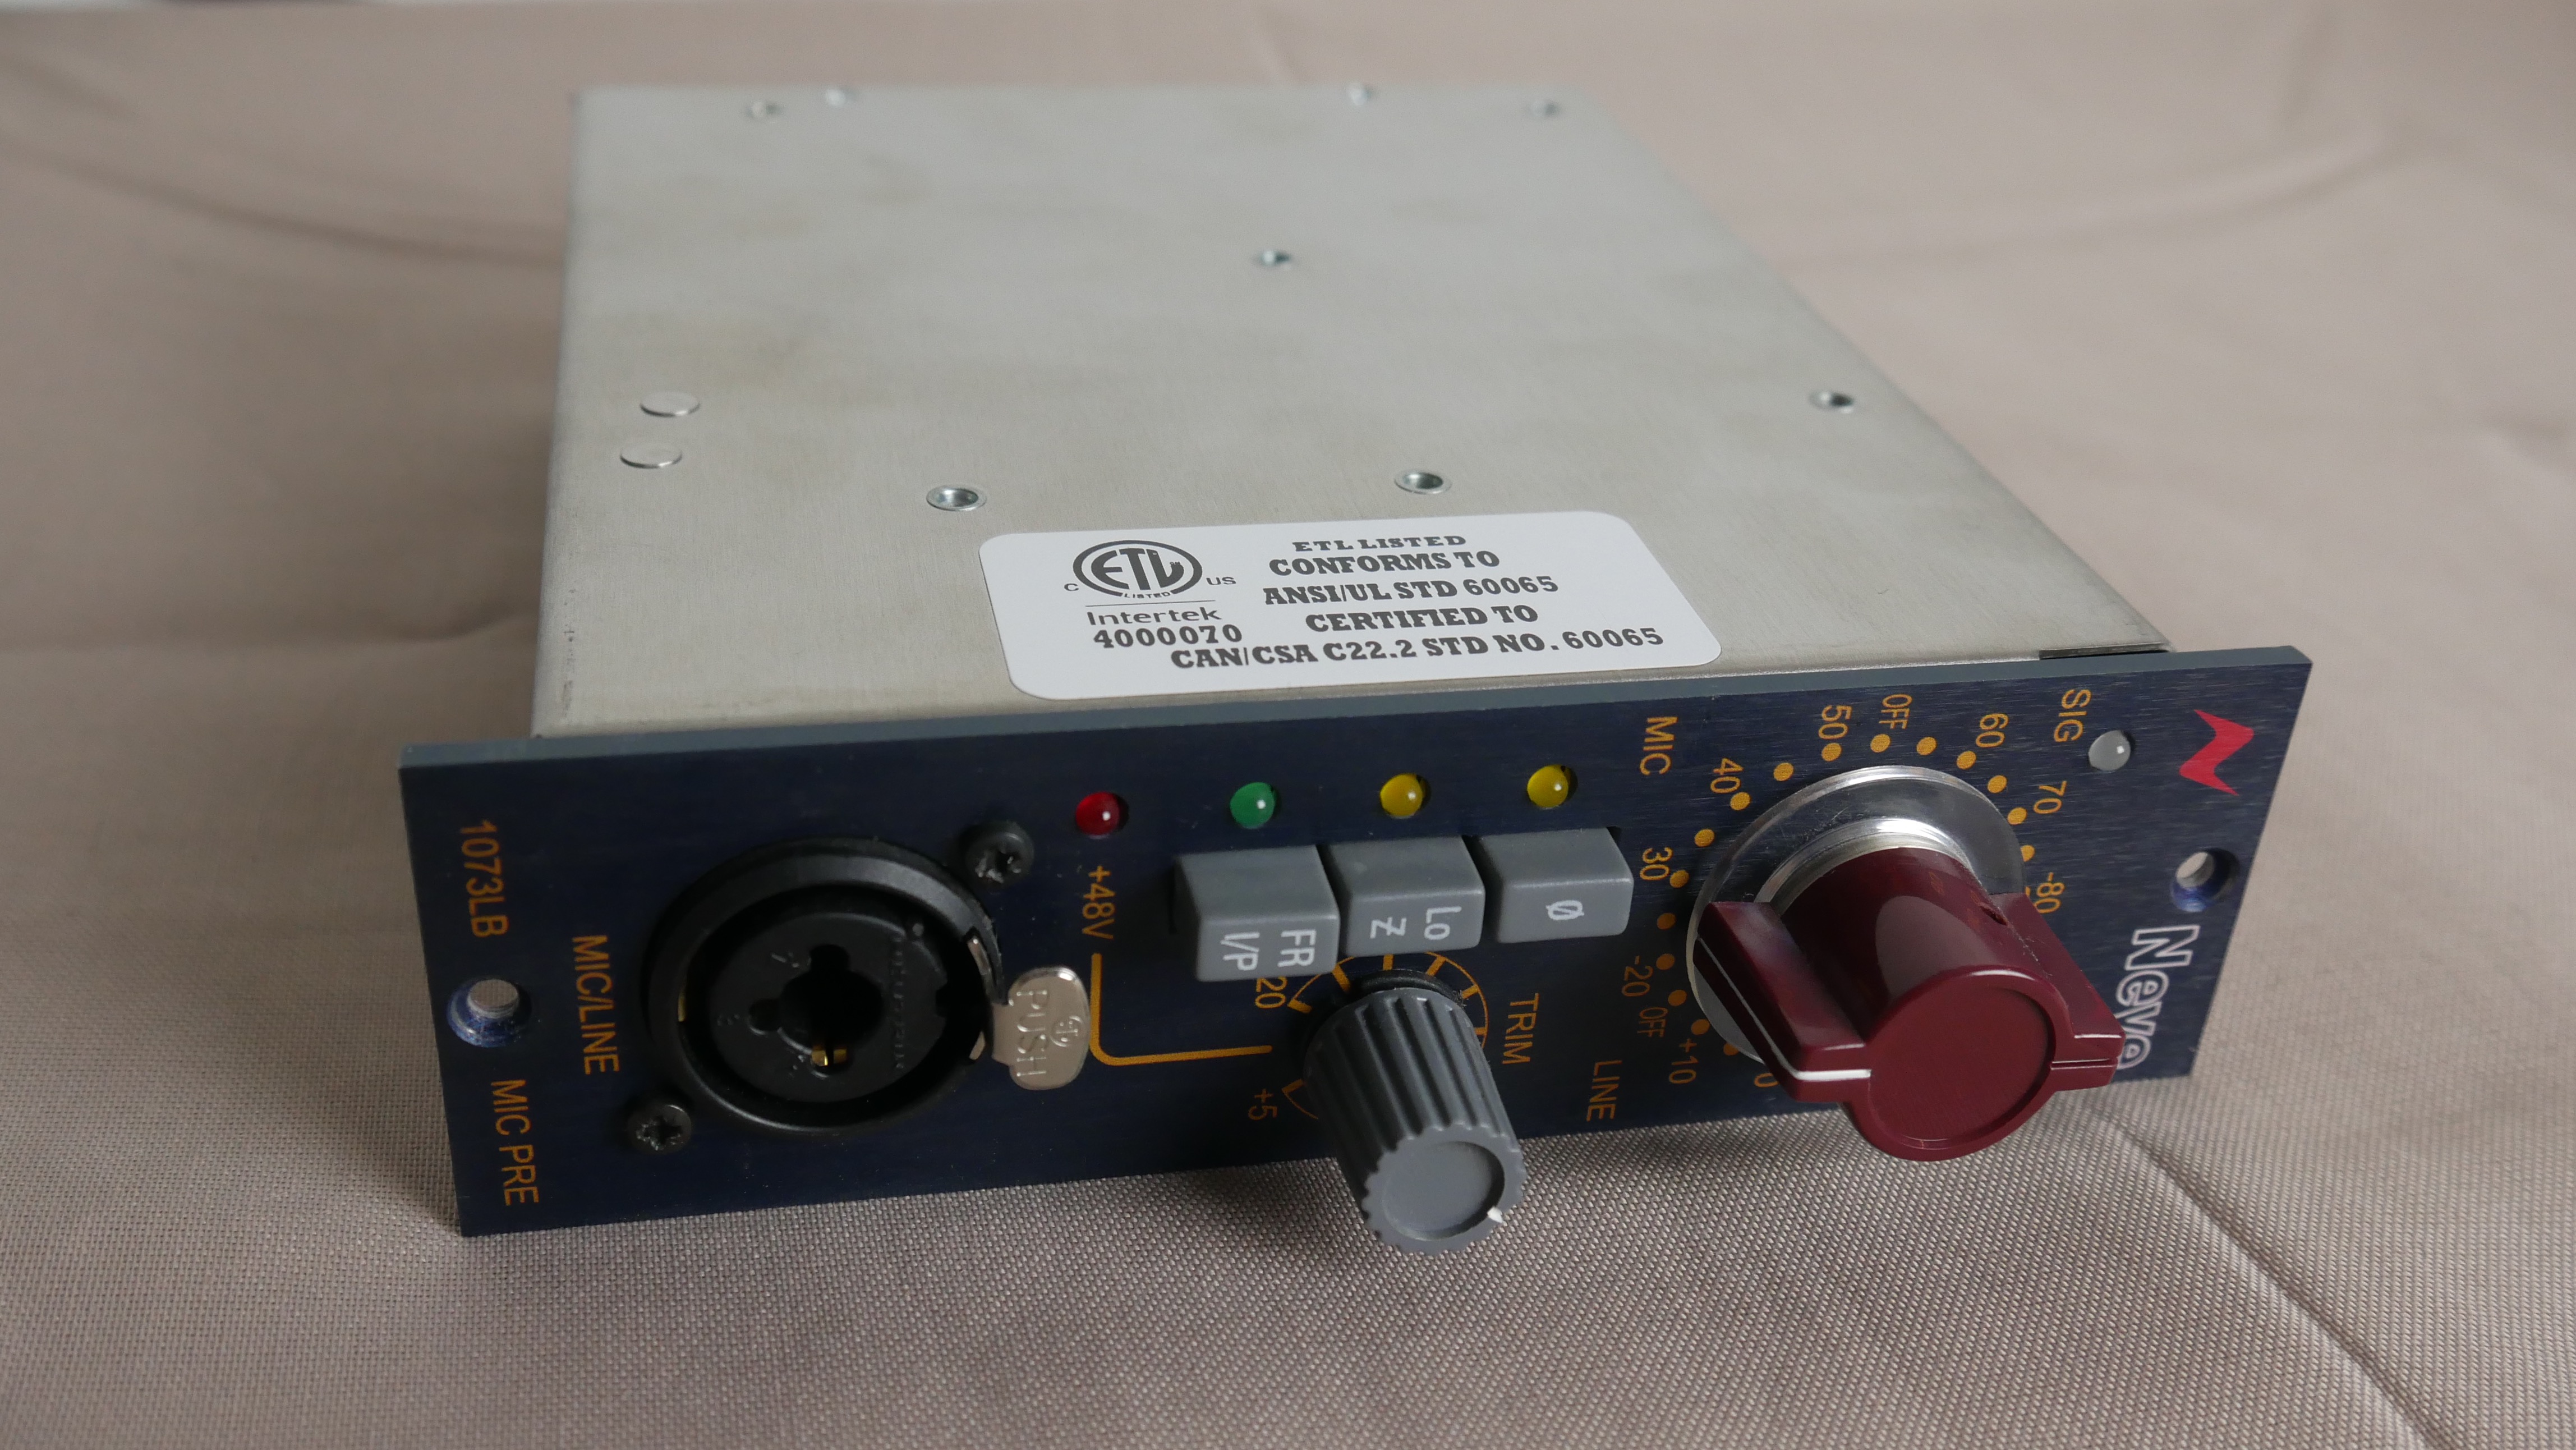 1073LB Mono Mic Preamp module AMS-Neve - Audiofanzine